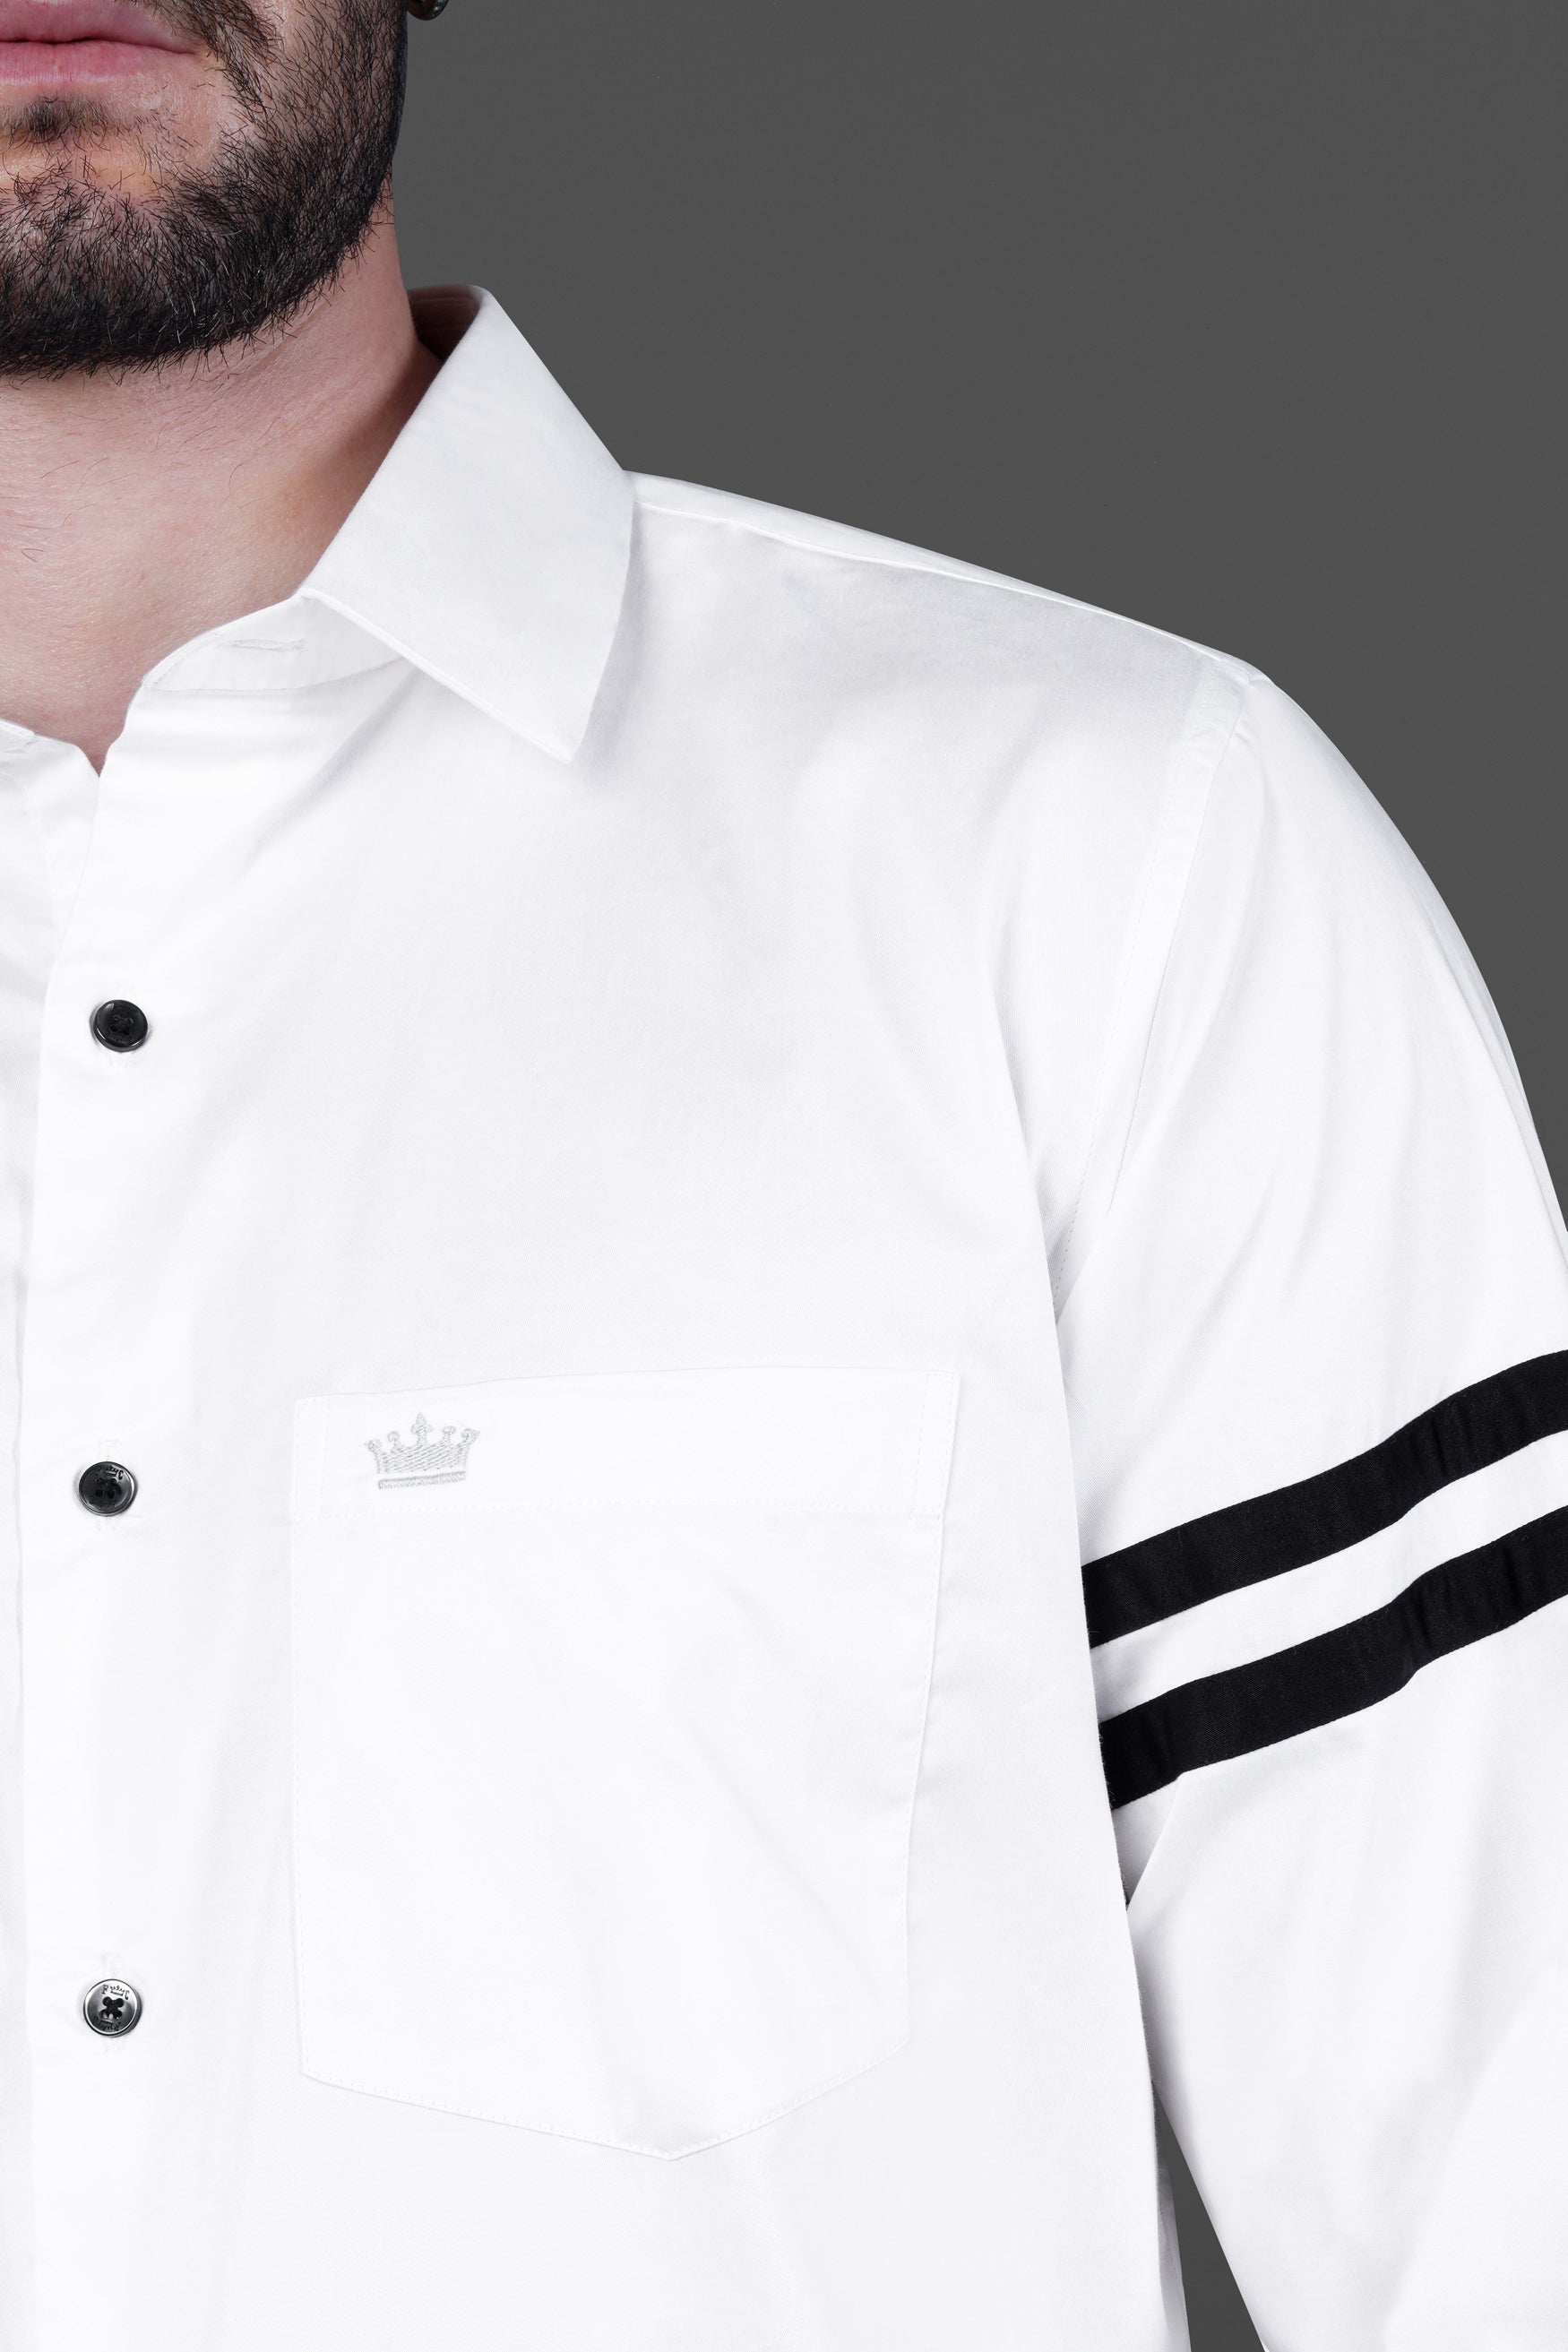 Bright White with Black Subtle Sheen Biceps Stripes Premium Satin Shirt